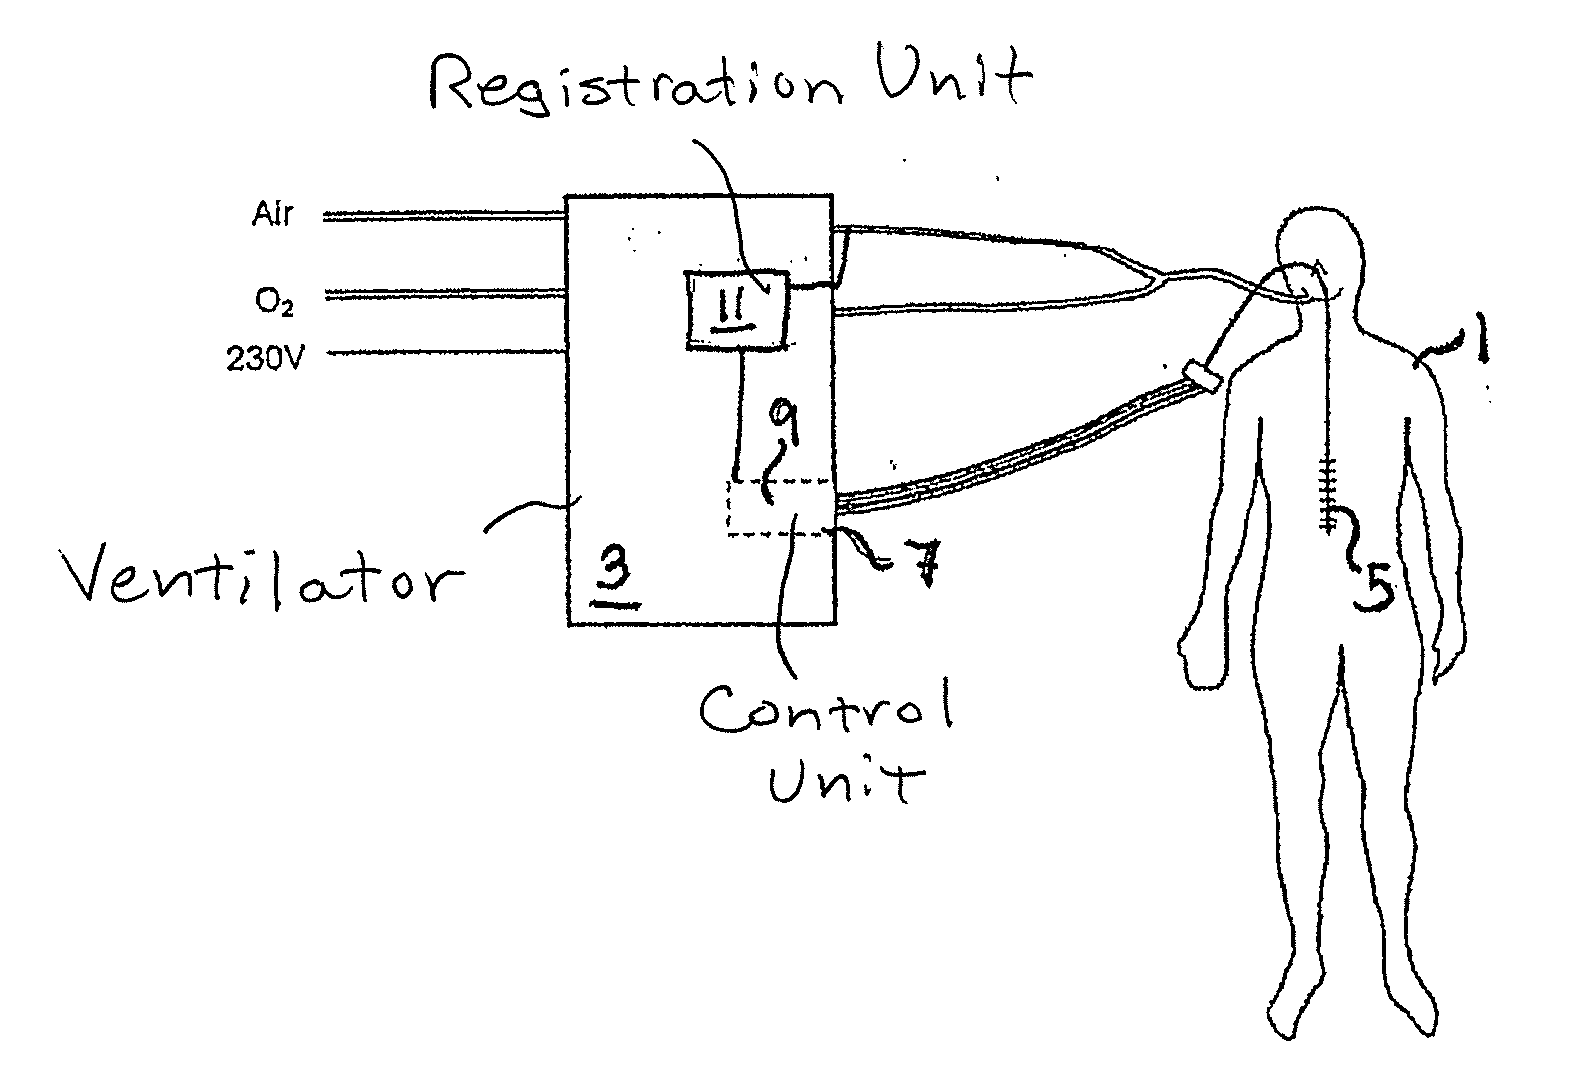 Control unit, method and computer-readable medium for operating a ventilator